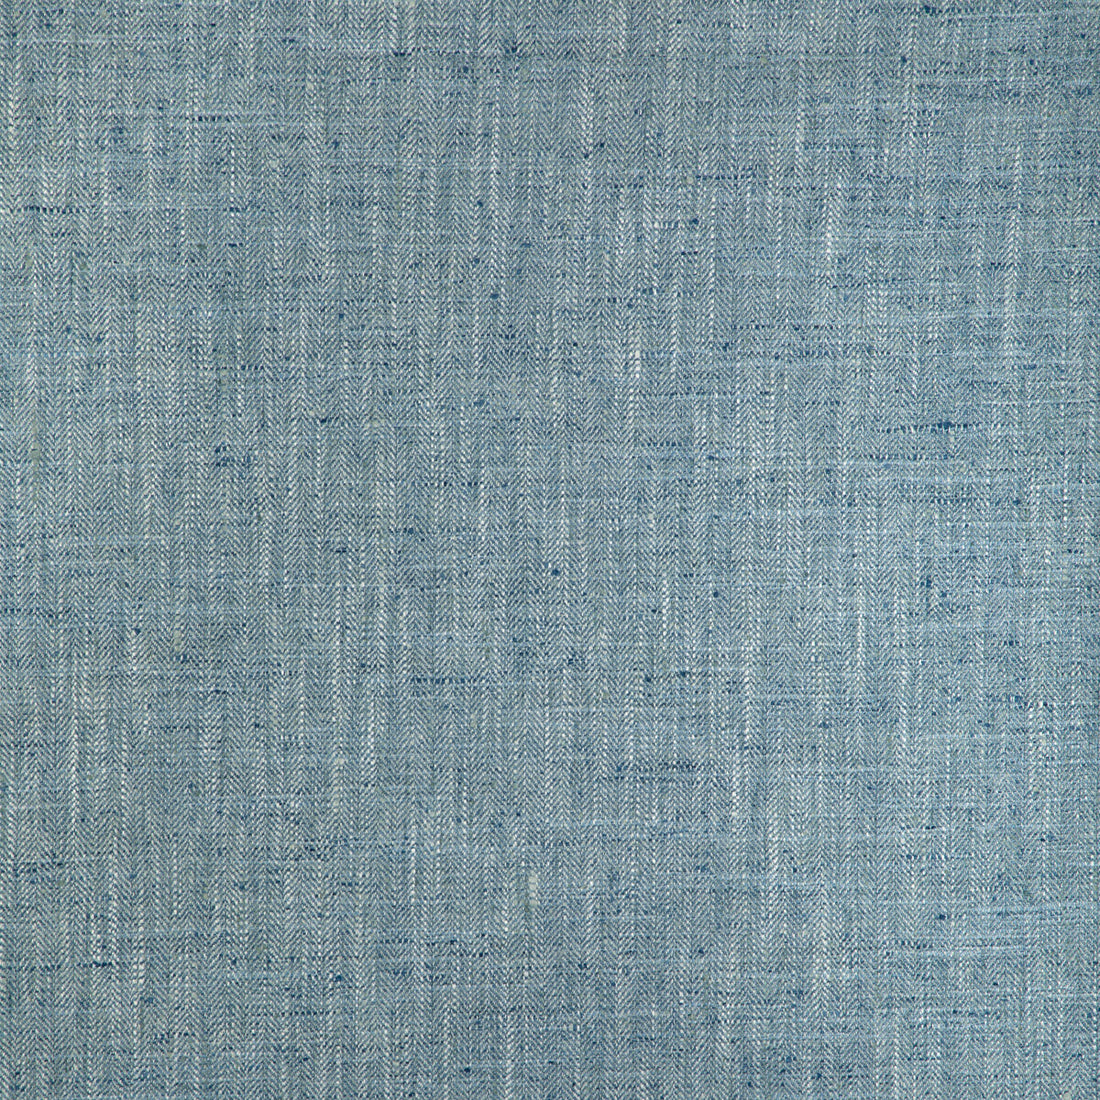 Kravet Smart fabric in 34088-535 color - pattern 34088.535.0 - by Kravet Smart